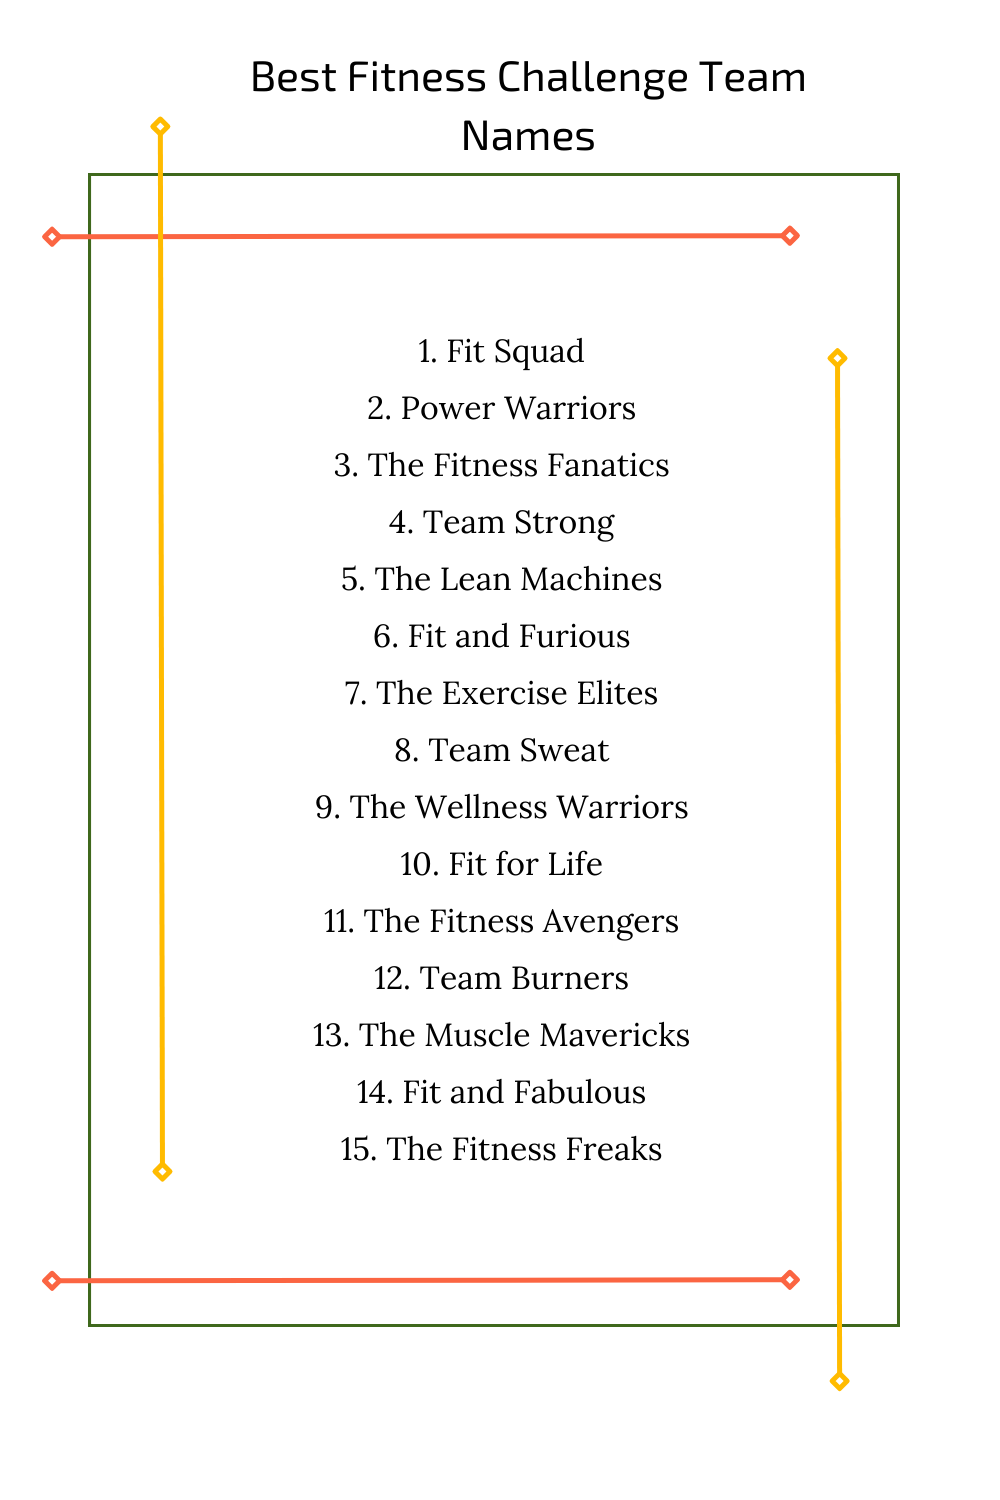 Best Fitness Challenge Team Names